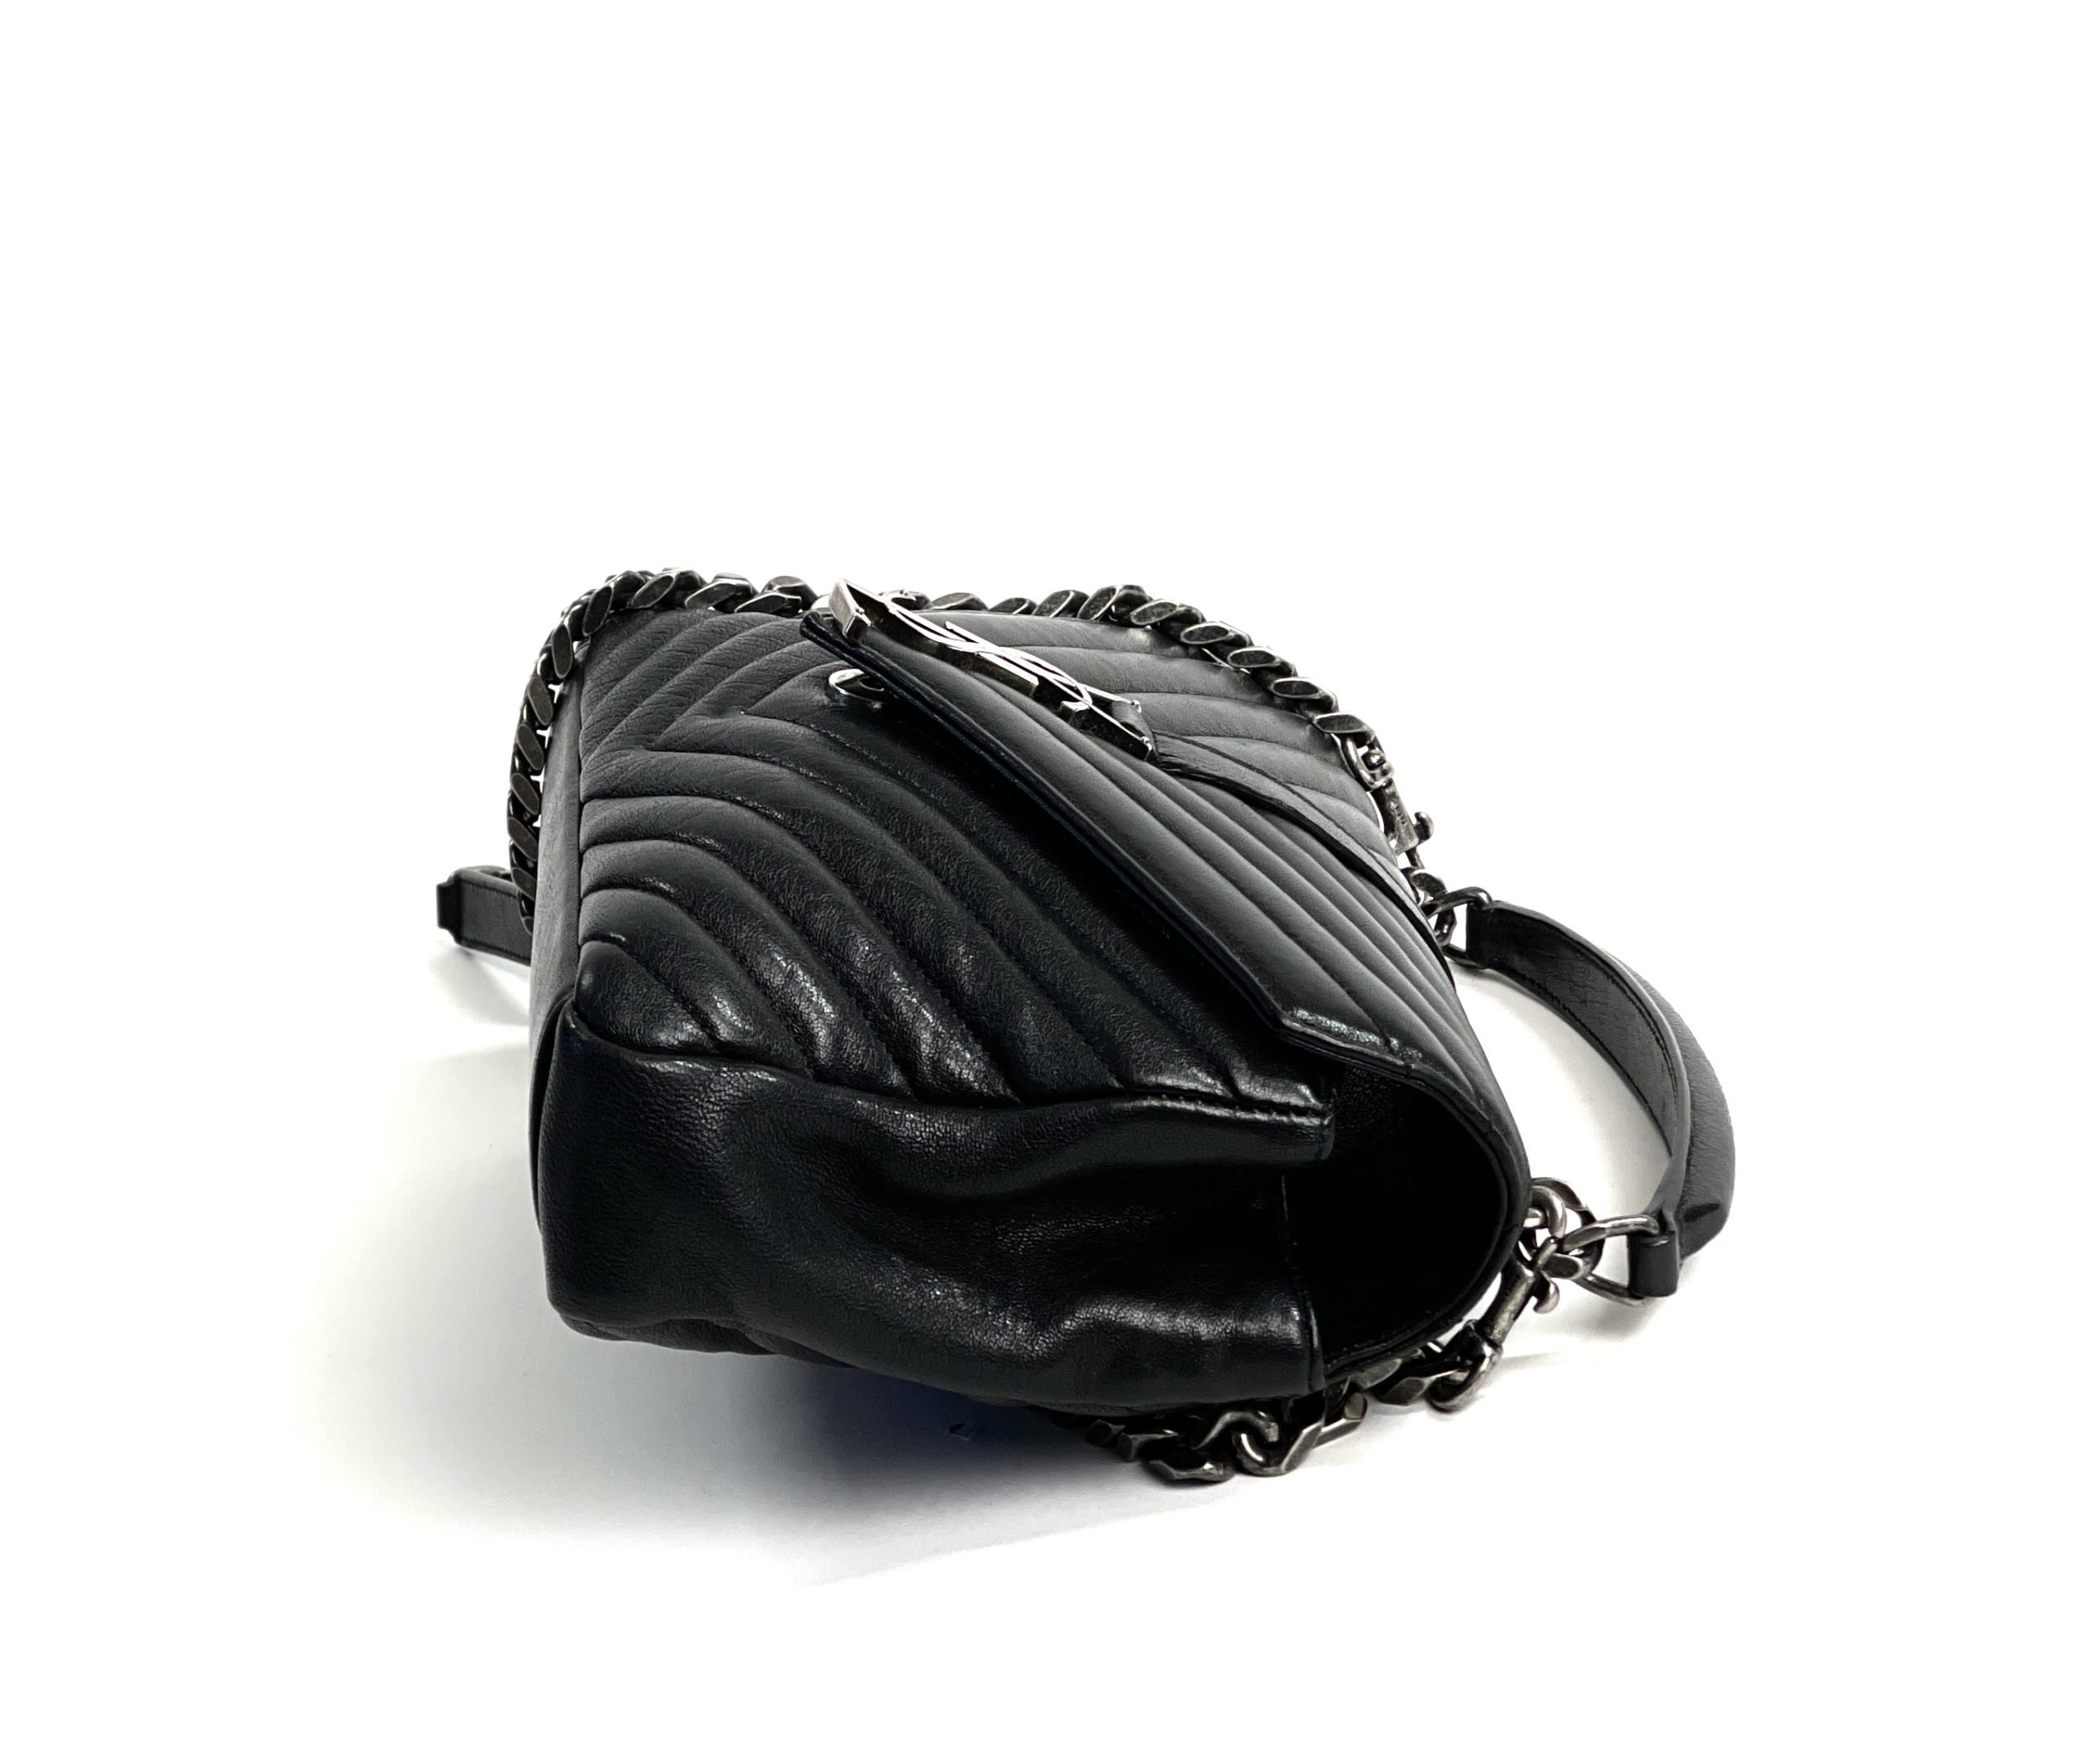 1995 Chanel Jumbo XL Maxi Black Quilted Lambskin Single Flap Handbag Purse